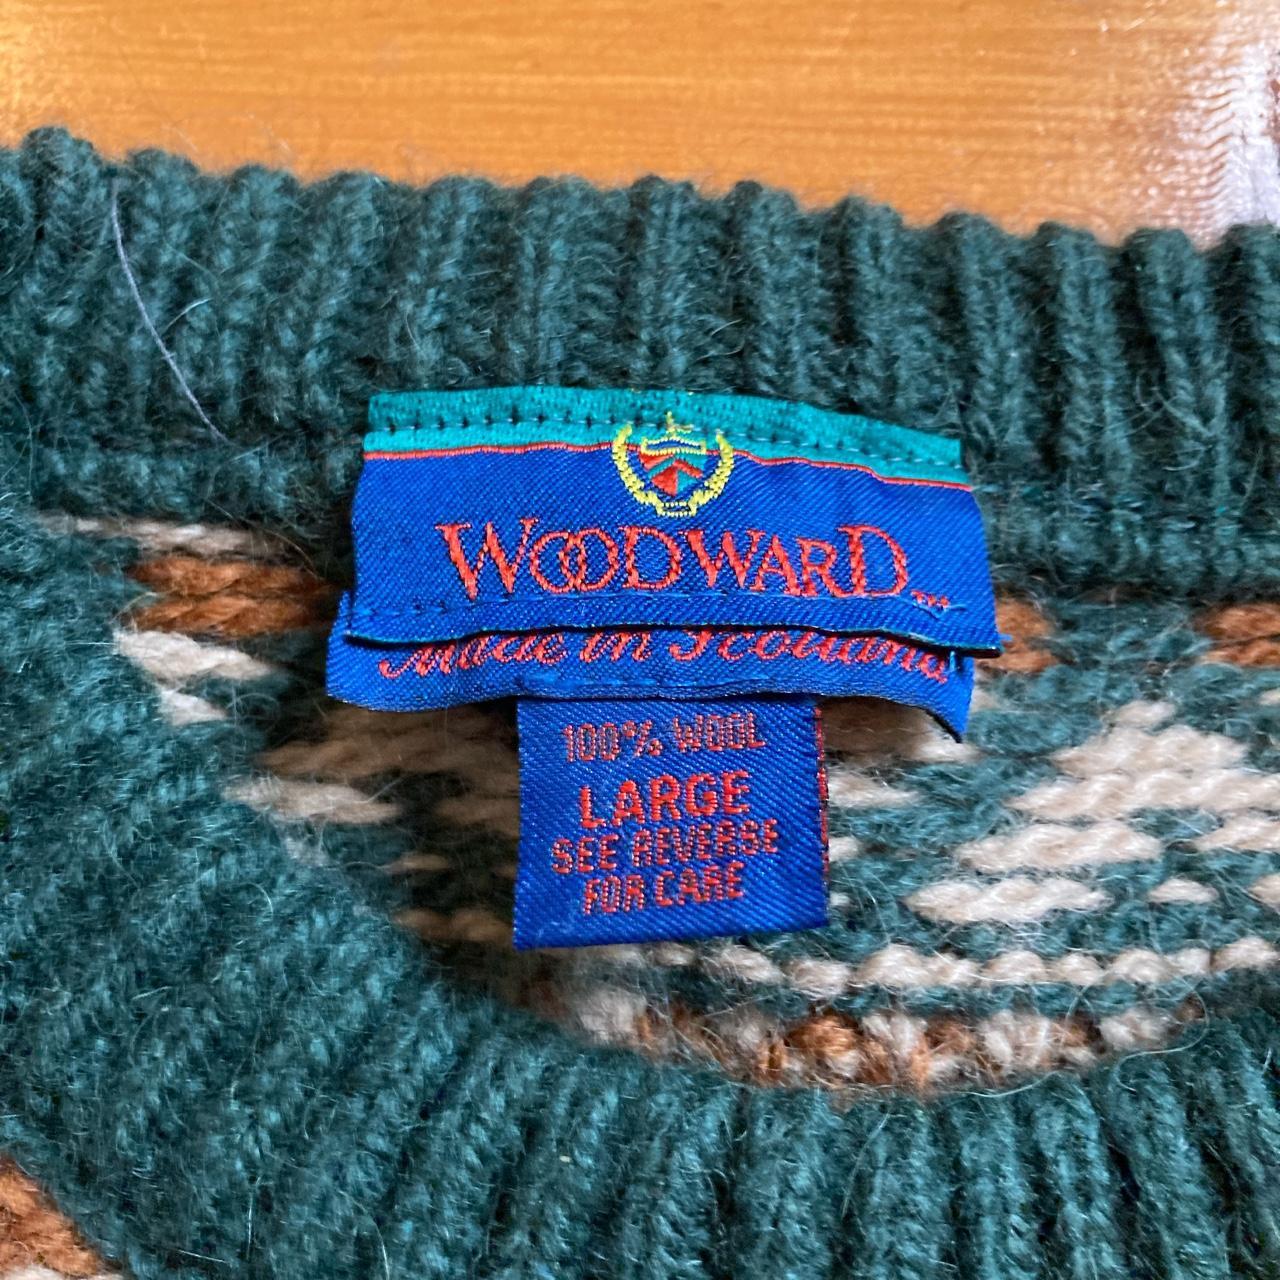 Vintage fairisle knit jumper Size L 22